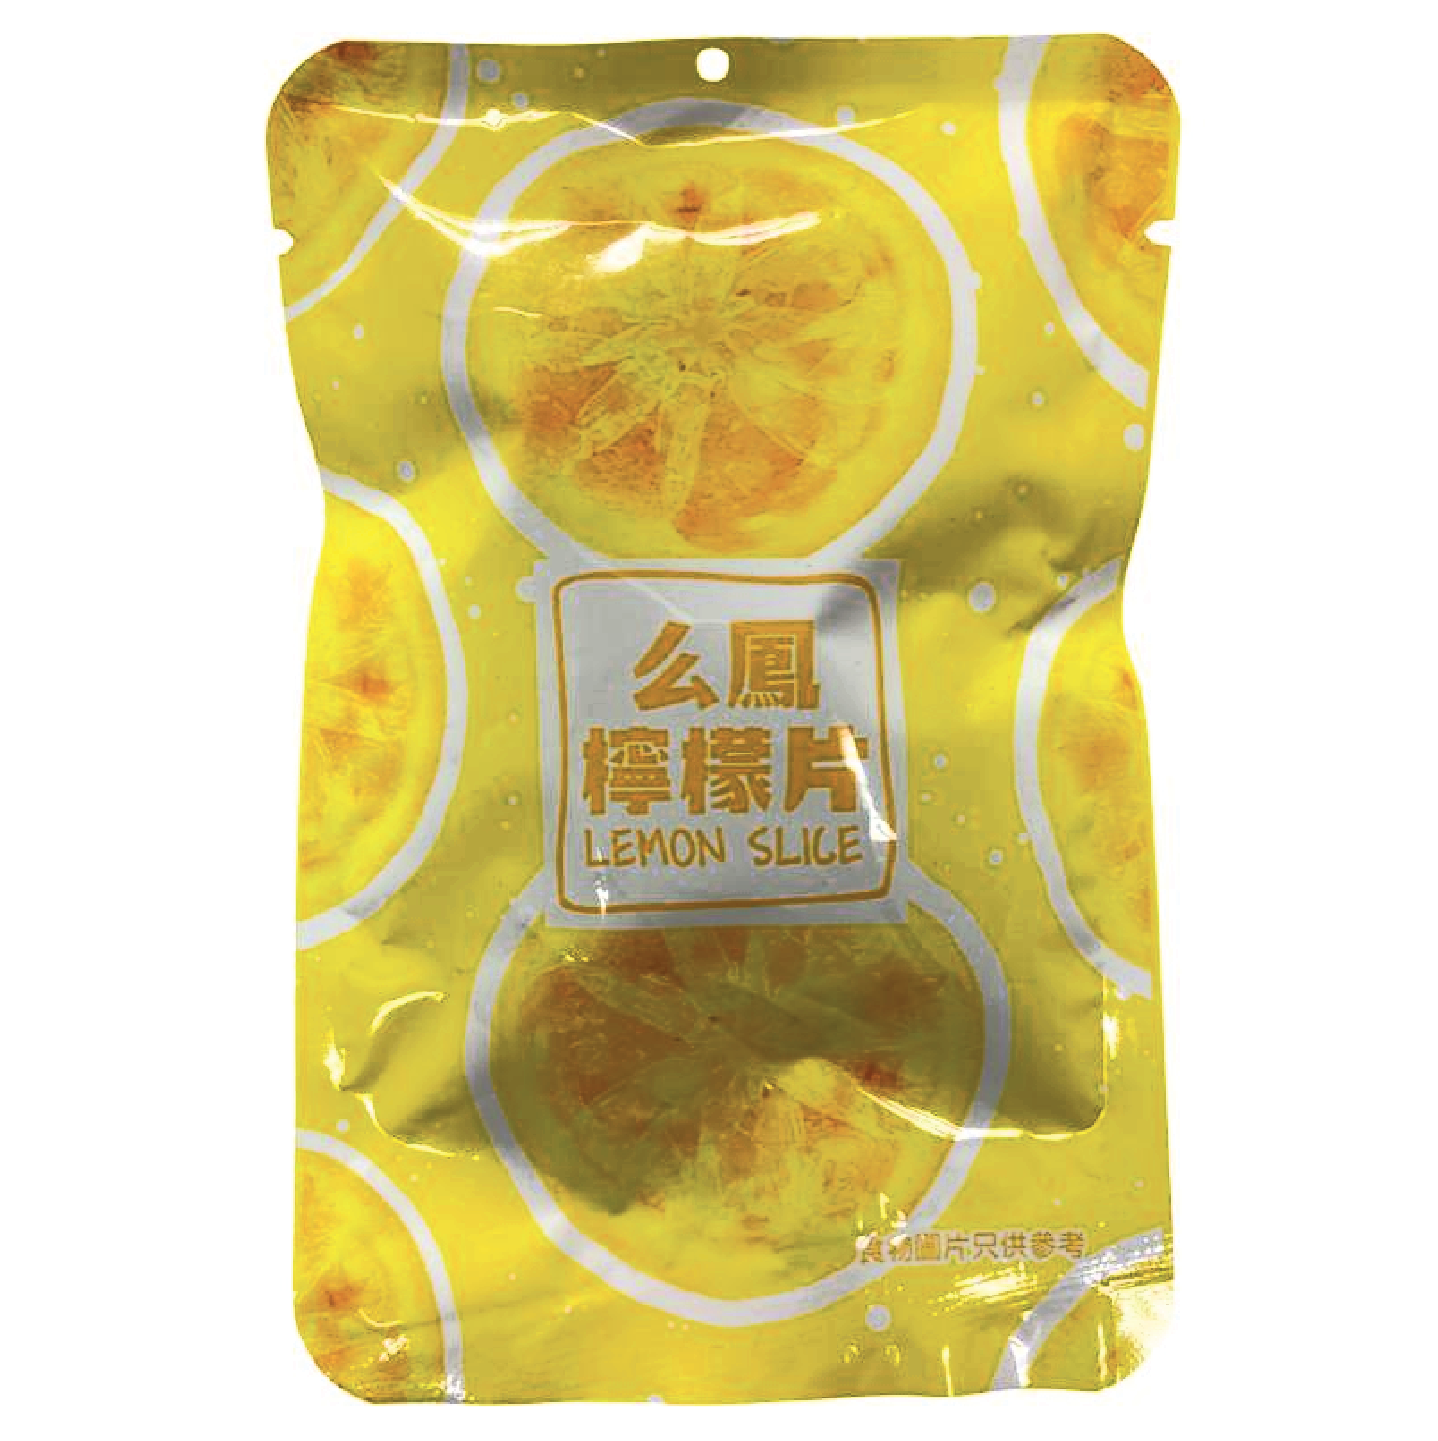 SHANG HAI YIU FUNG LEMON SLICE 20G 上海么鳳 即食檸檬片 20G